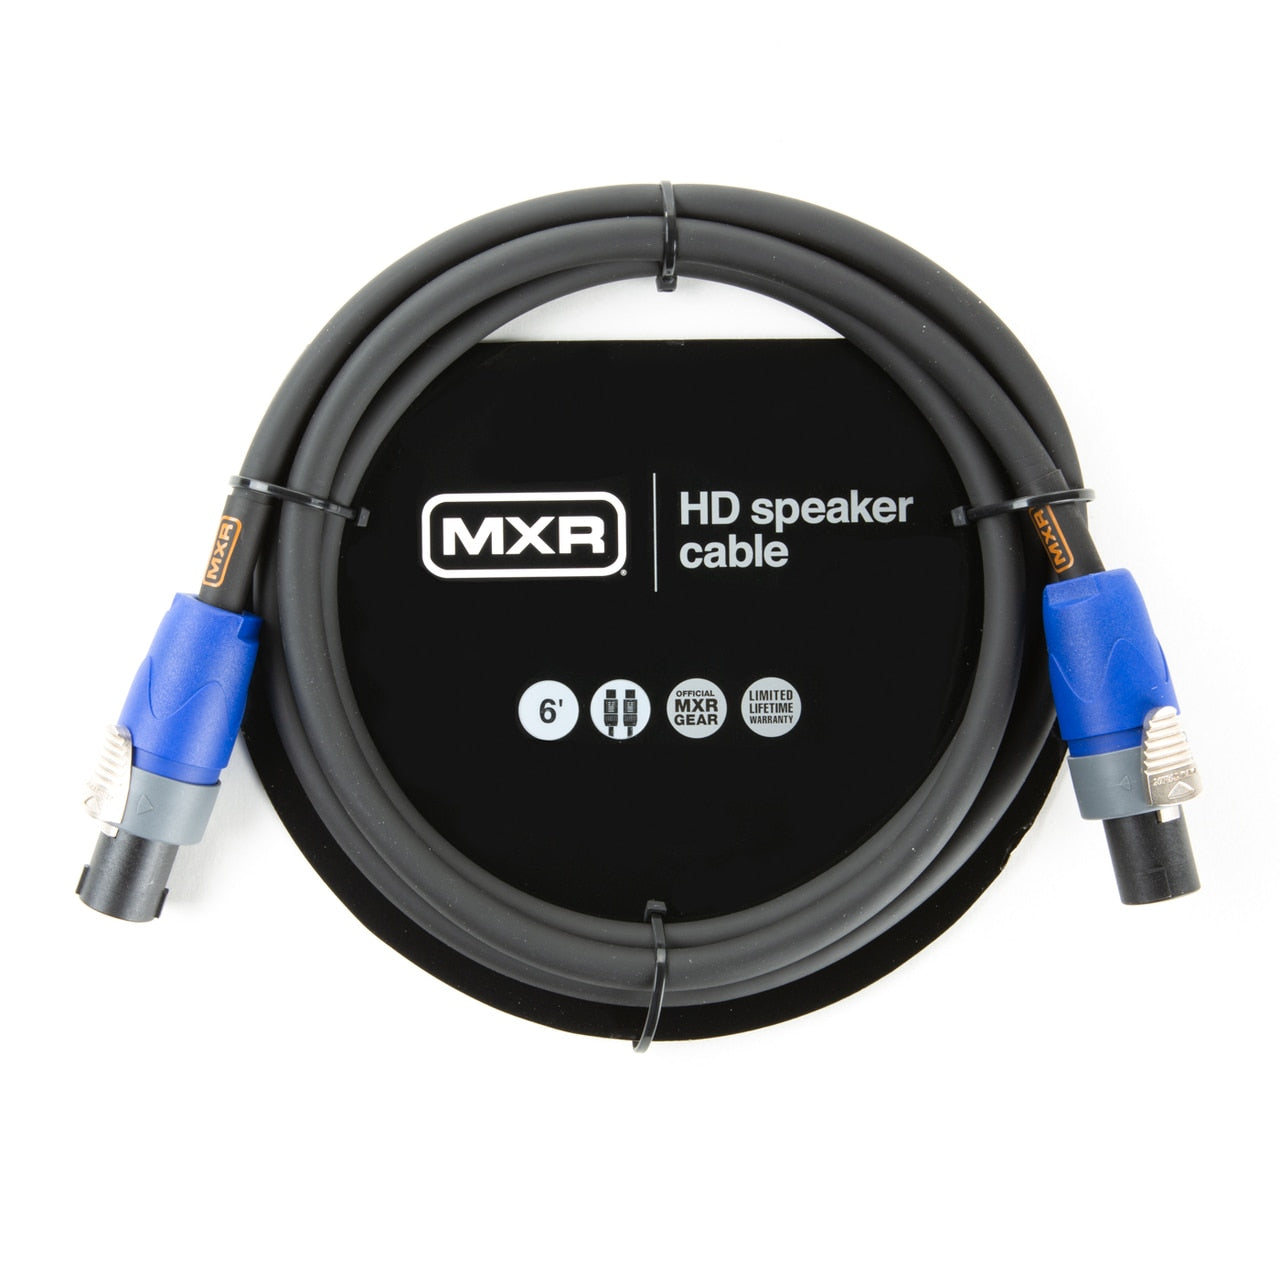 MXR® 6FT HD SPEAKON™ SPEAKER CABLE